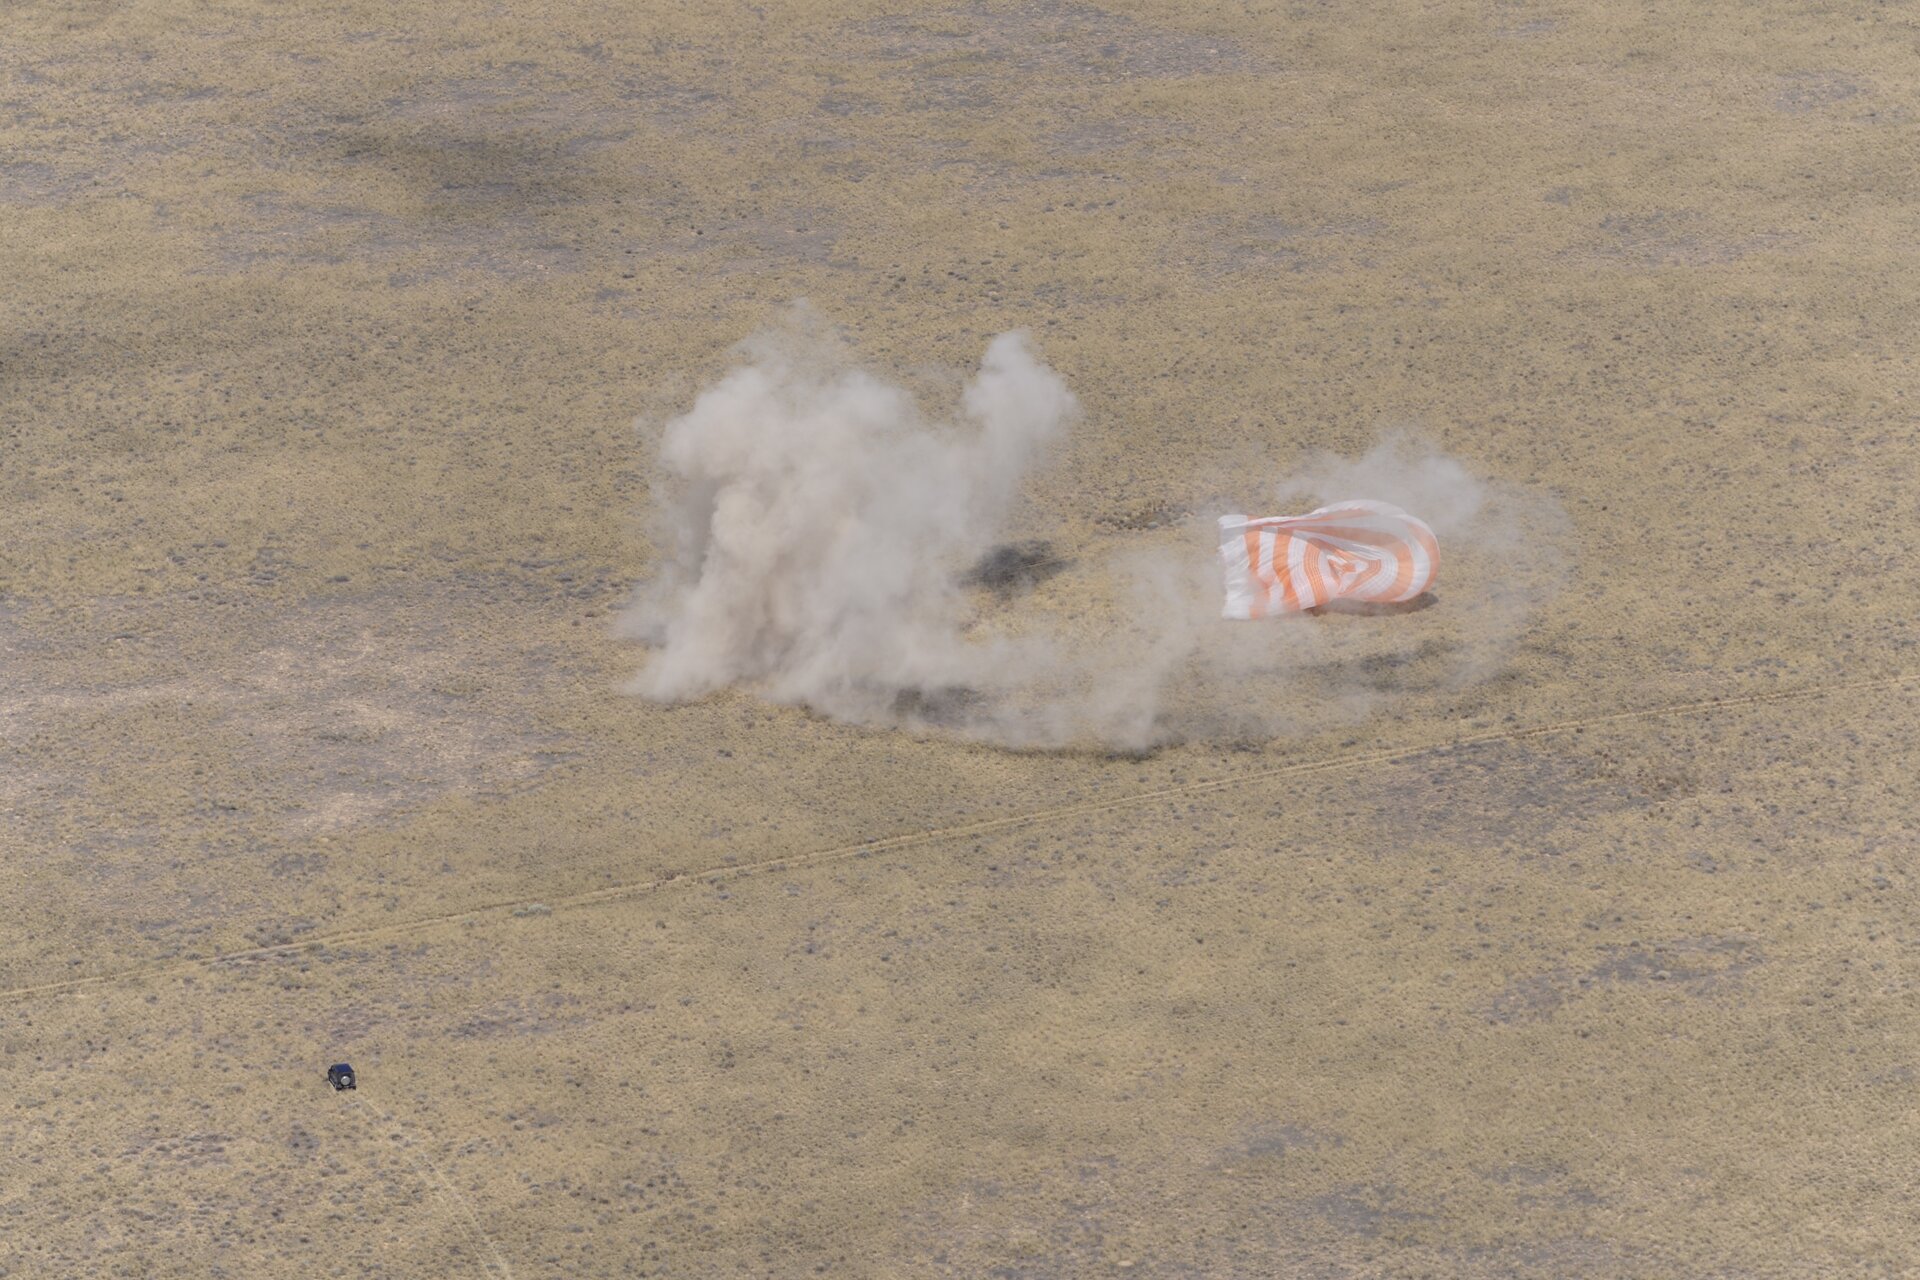 Soyuz landing